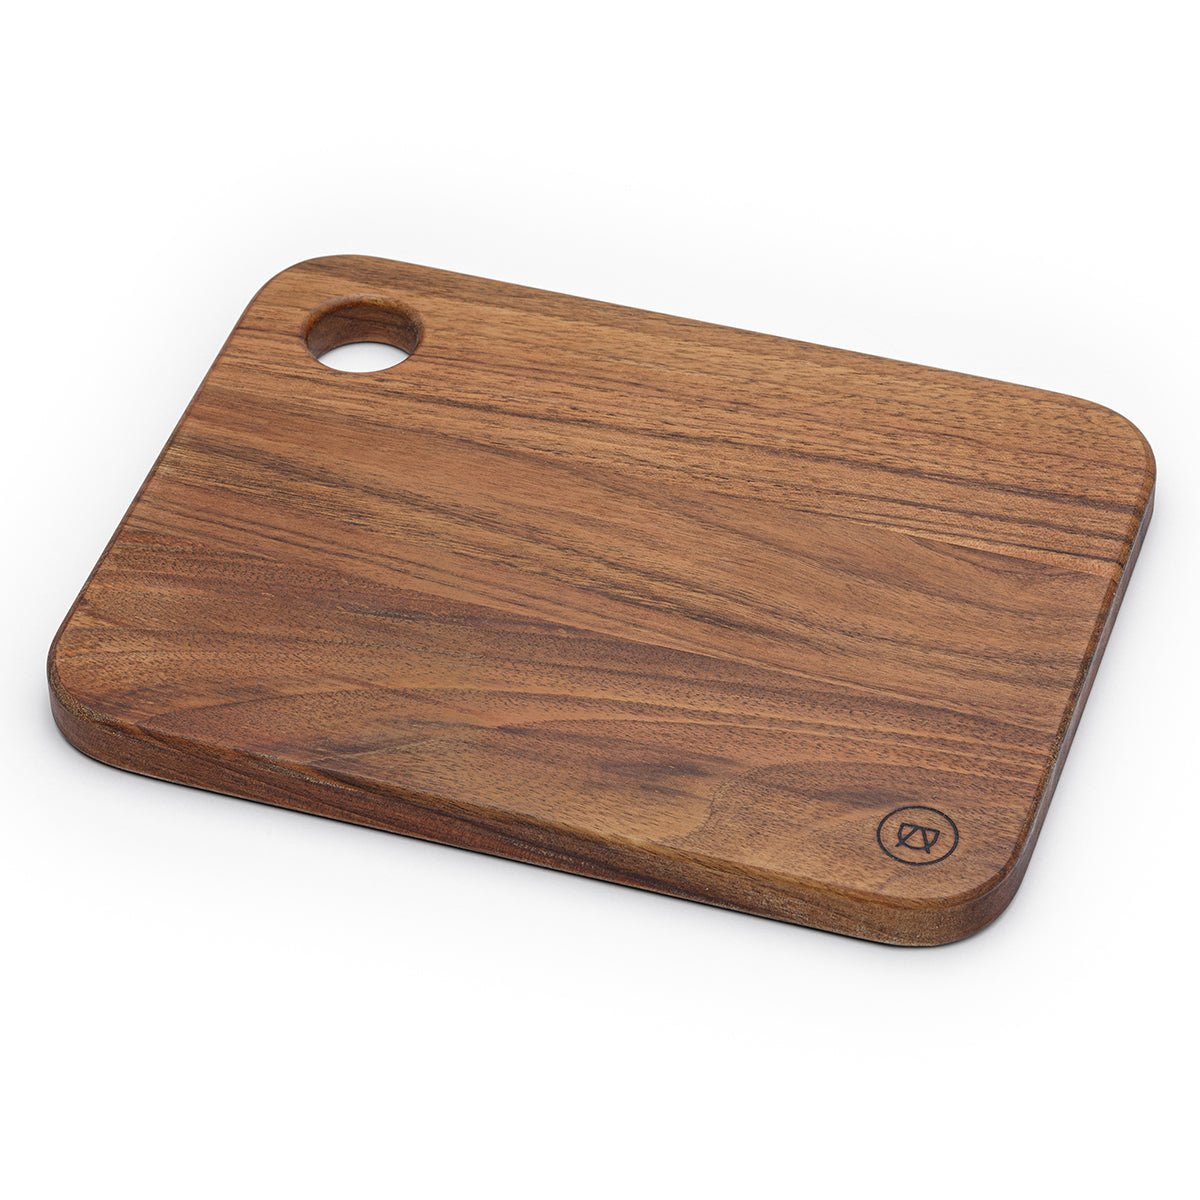 Elegant “egg pad” cutting board made of walnut wood